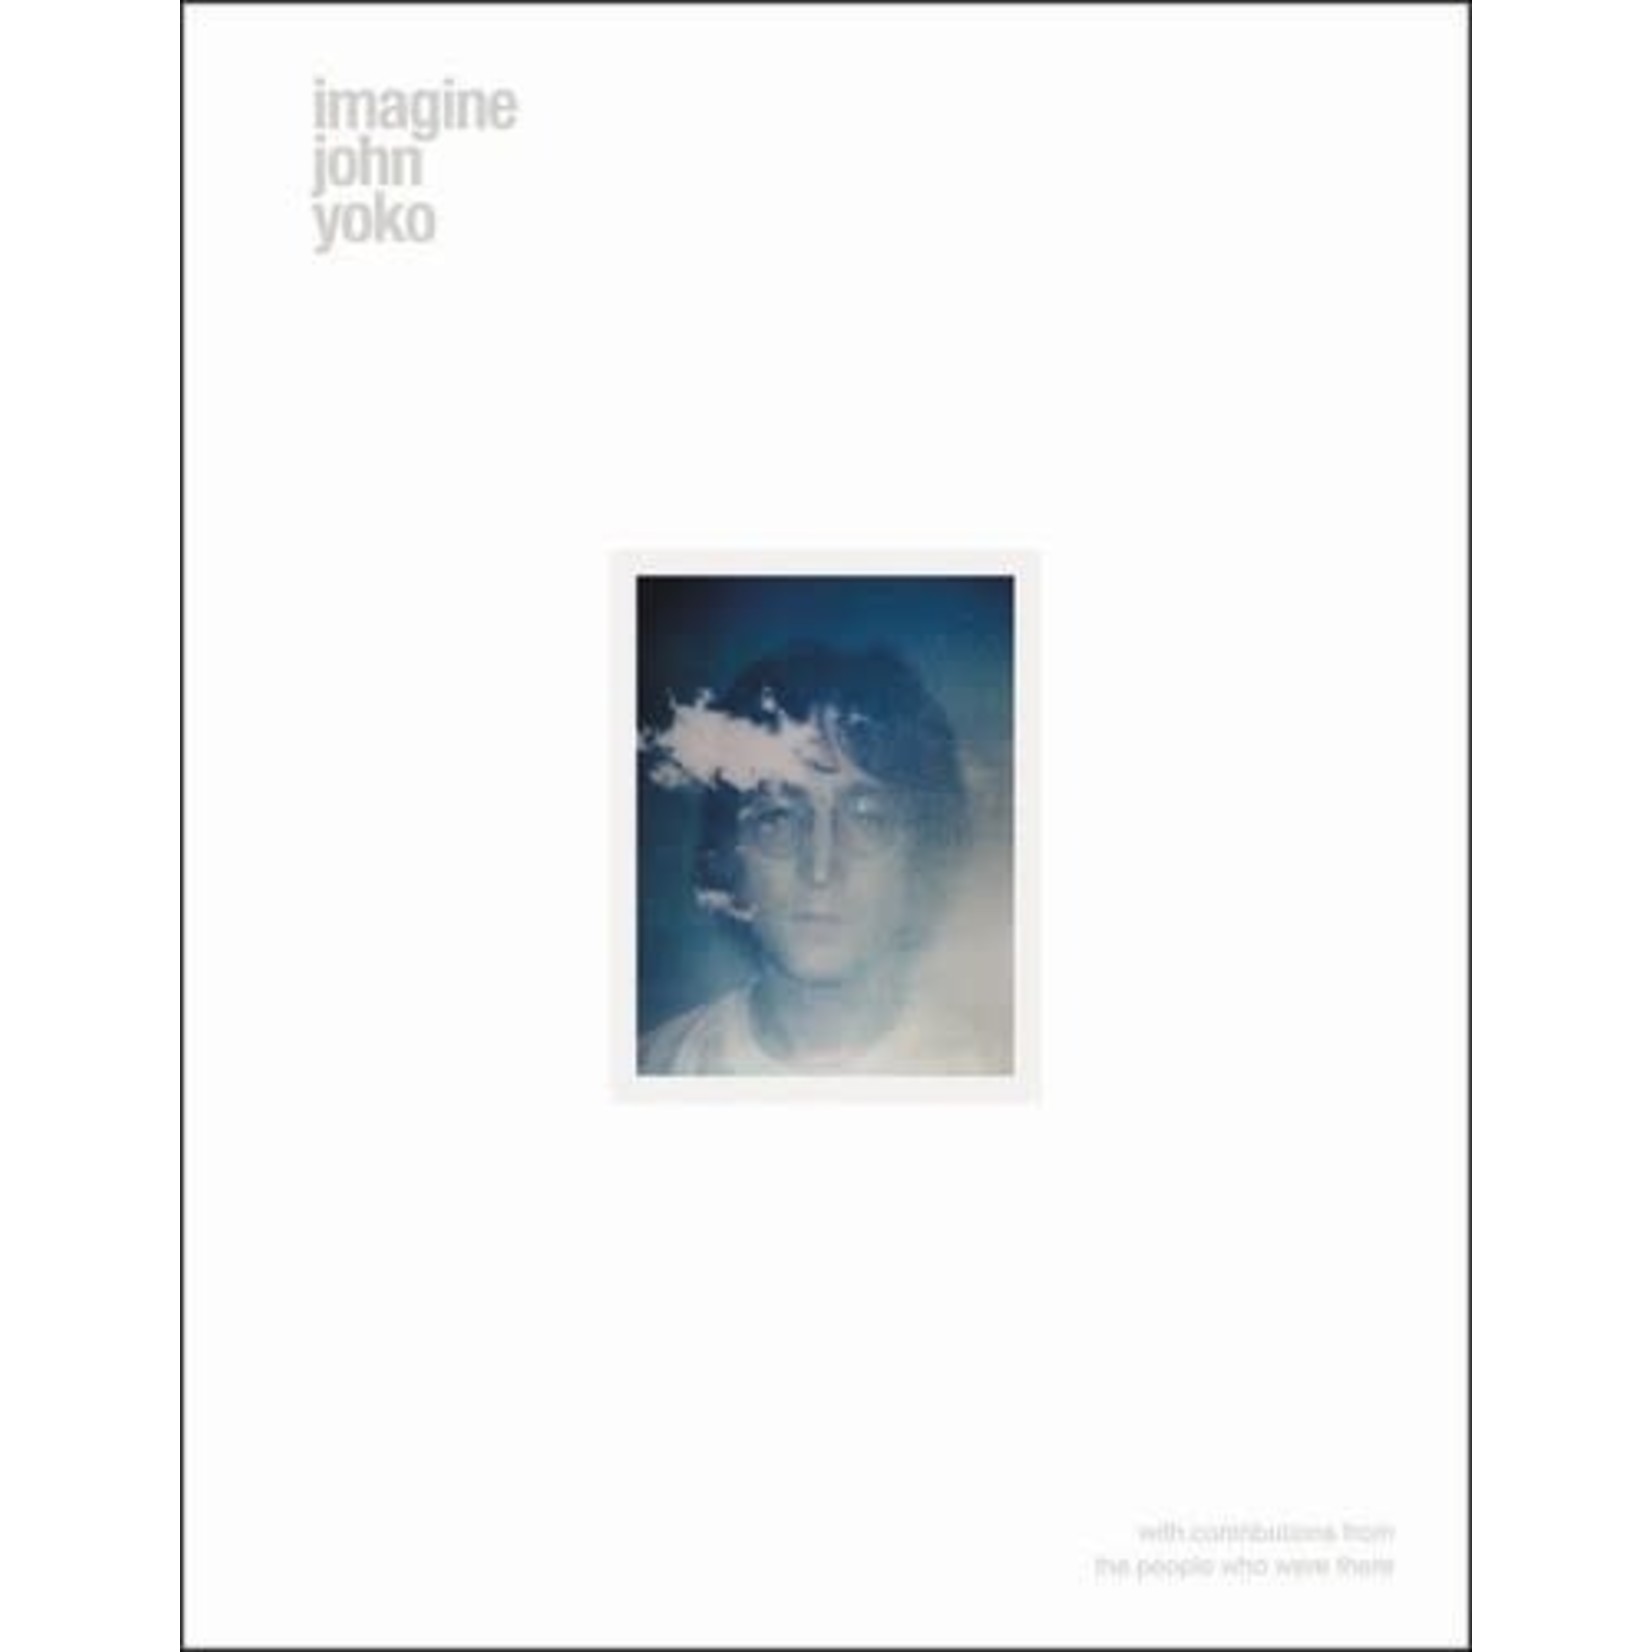 John Lennon & Yoko Ono - Imagine (Book)